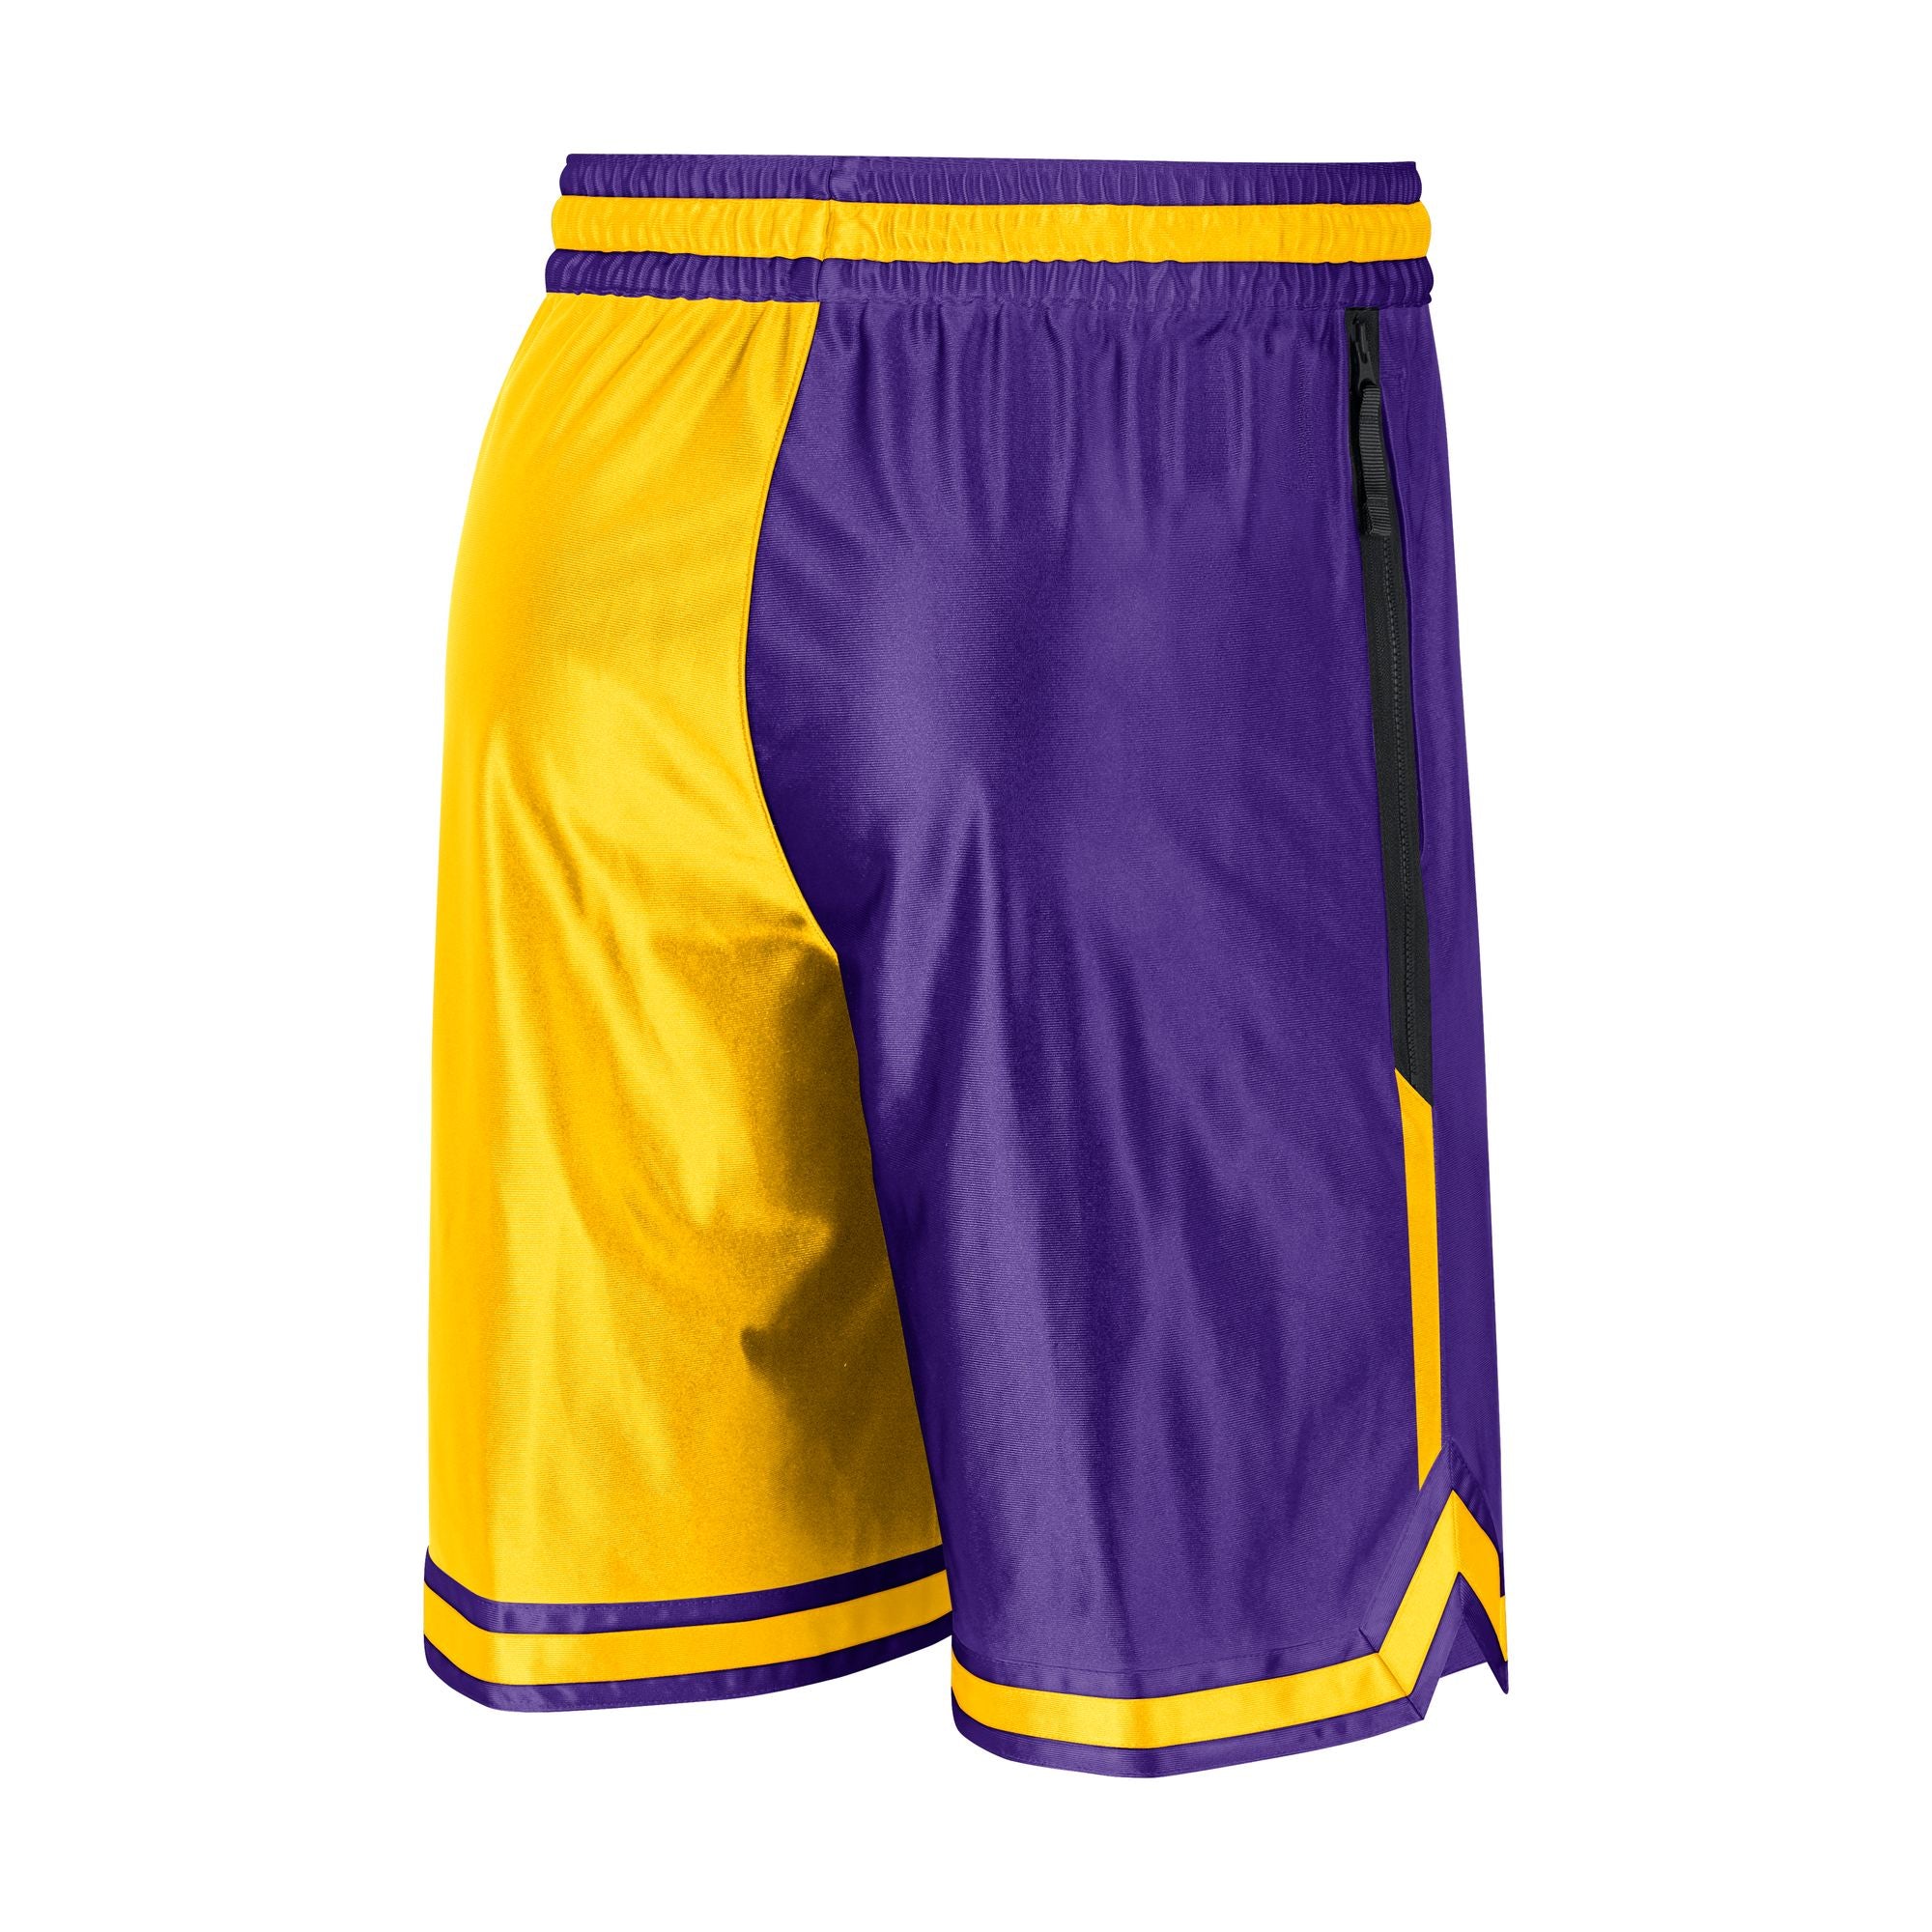 Mens Los Angeles Lakers Dri-Fit DNA Shorts